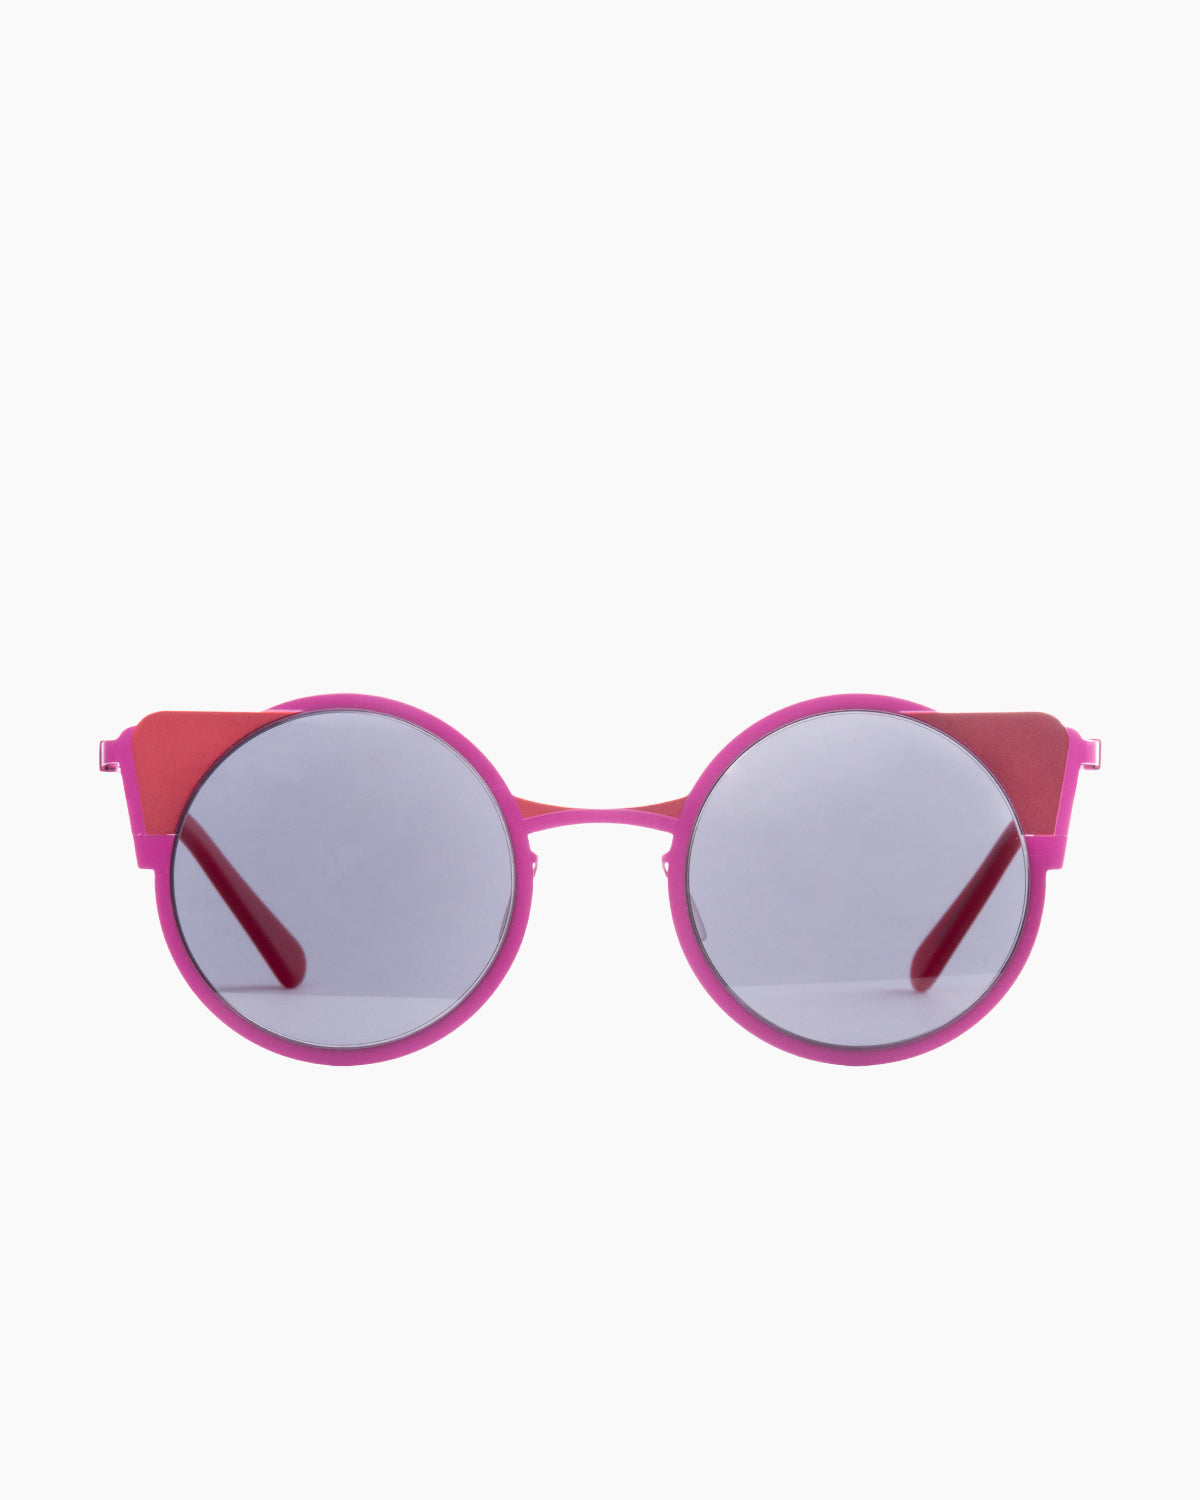 Gamine - Monti - Purple/Red | glasses bar